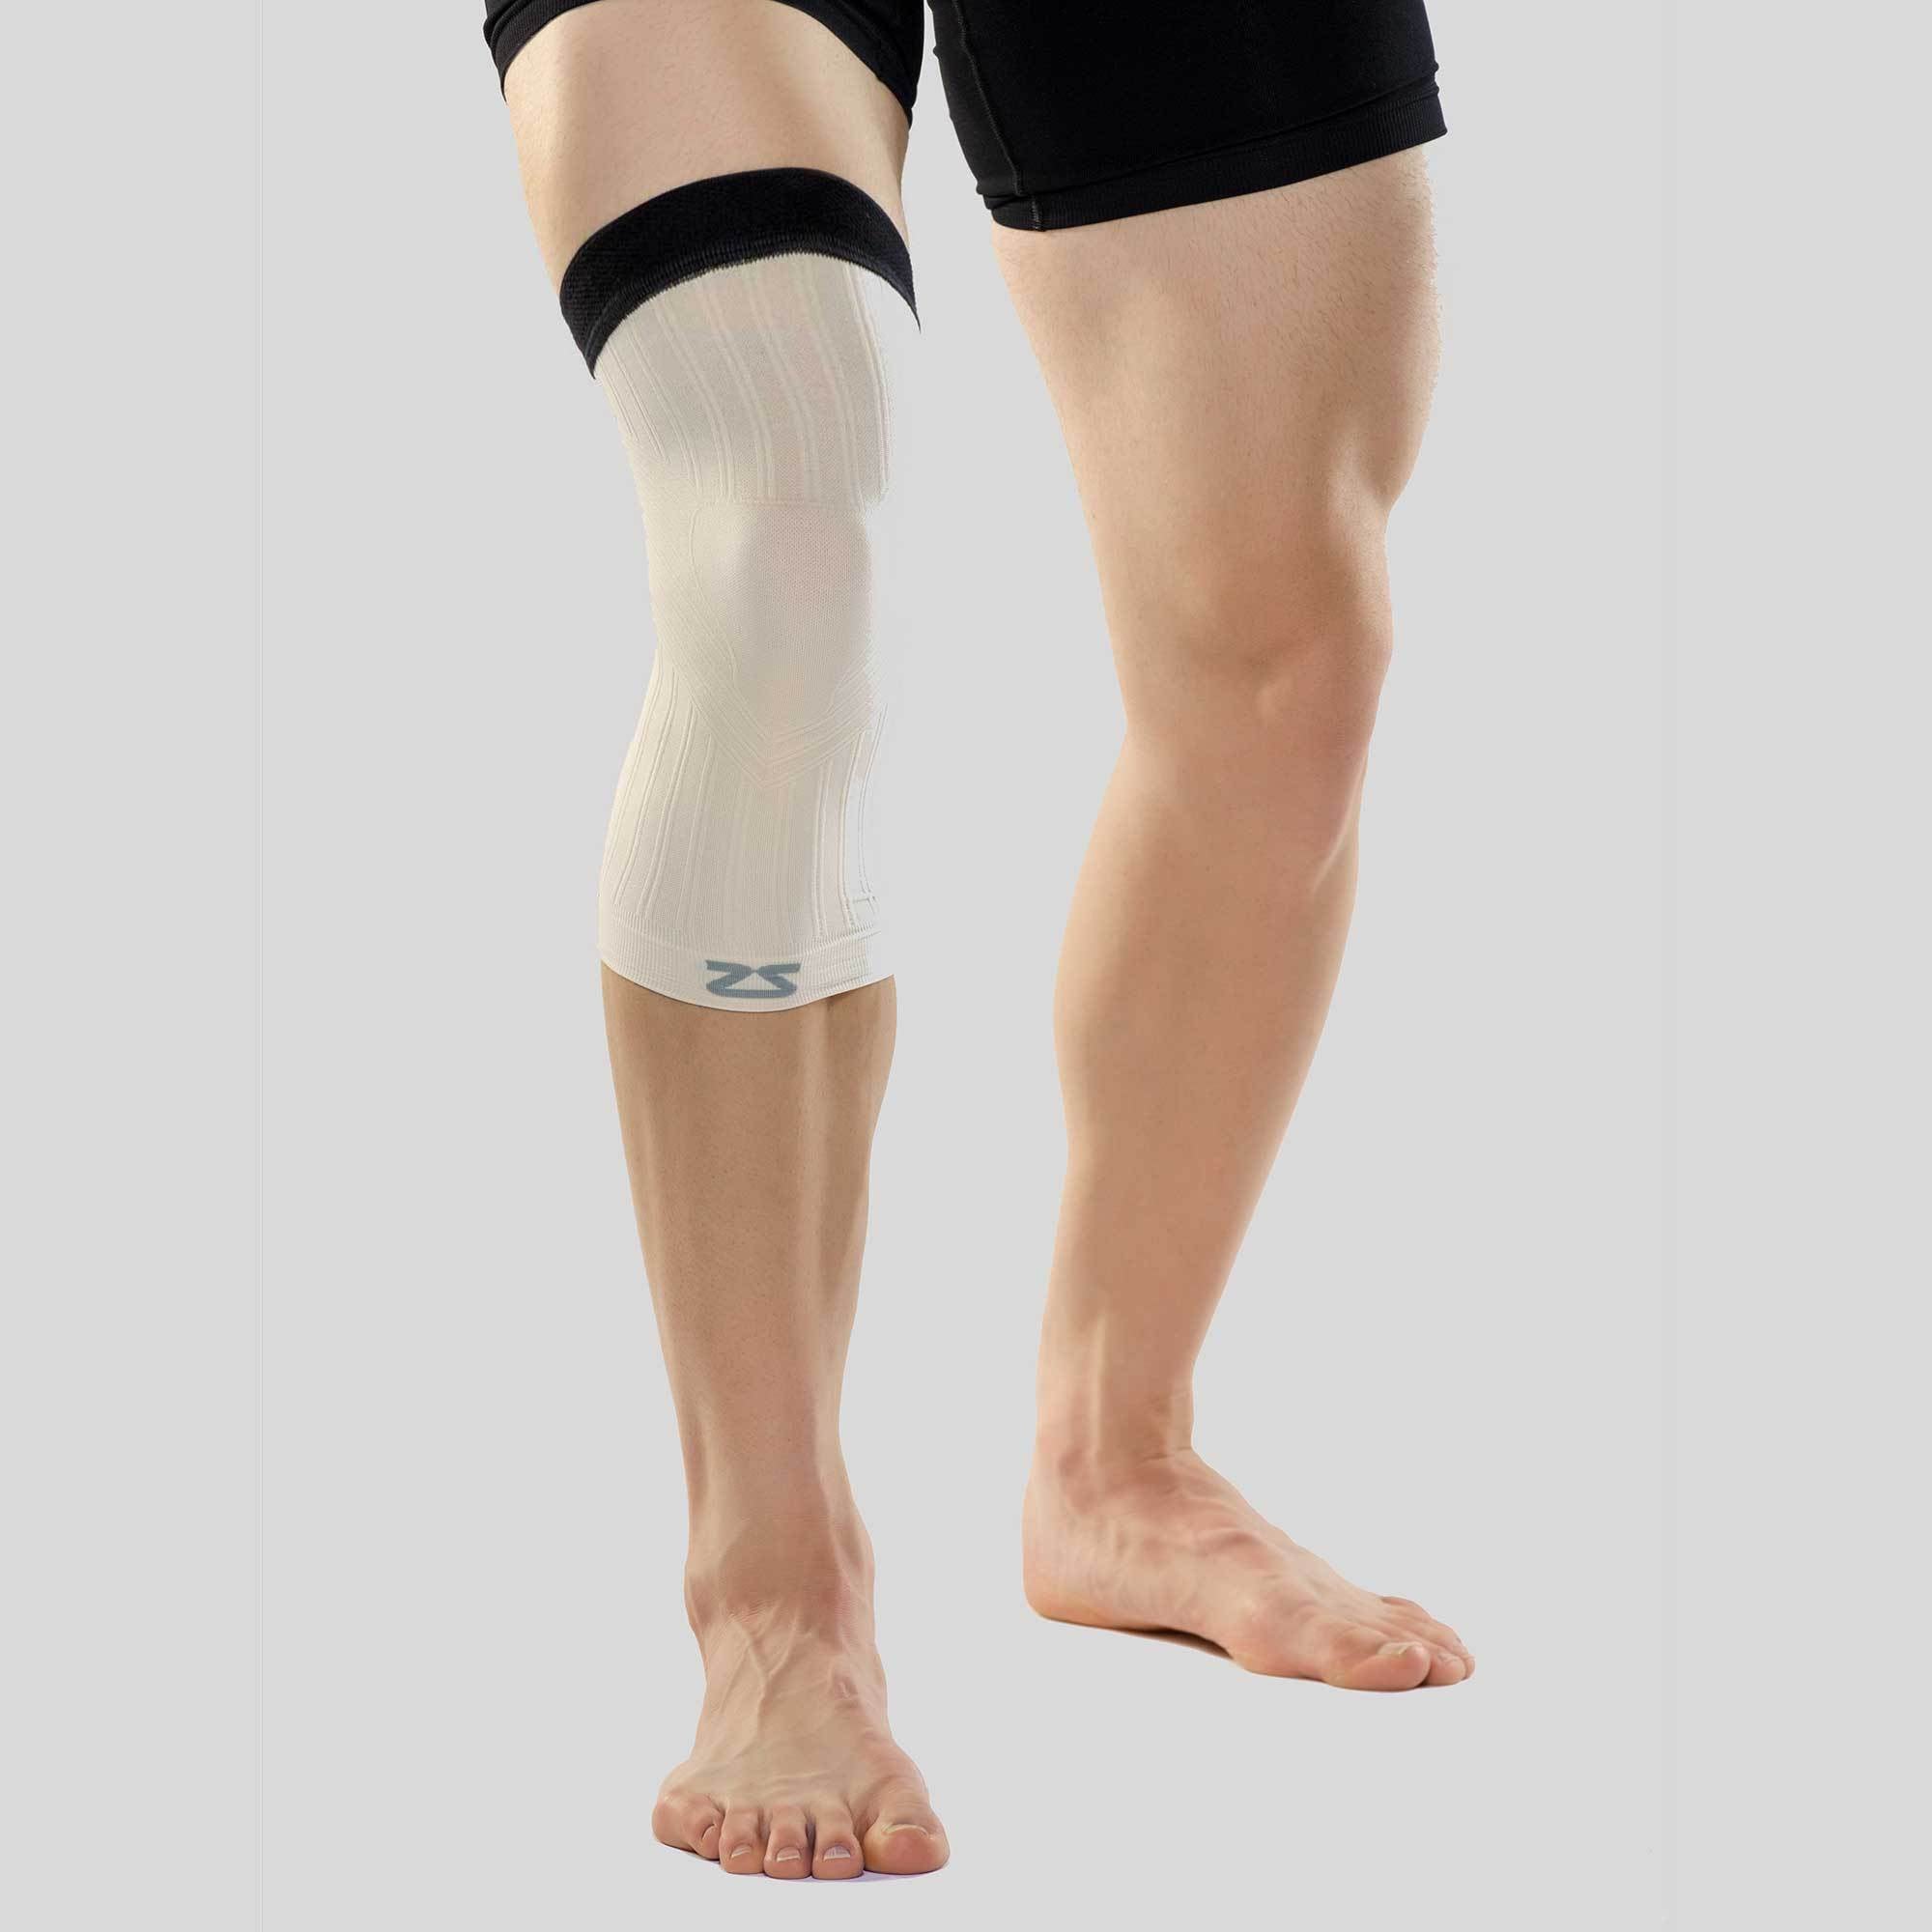 Zensah Compression Knee Sleeve - Relieve Knee Pain, Treat